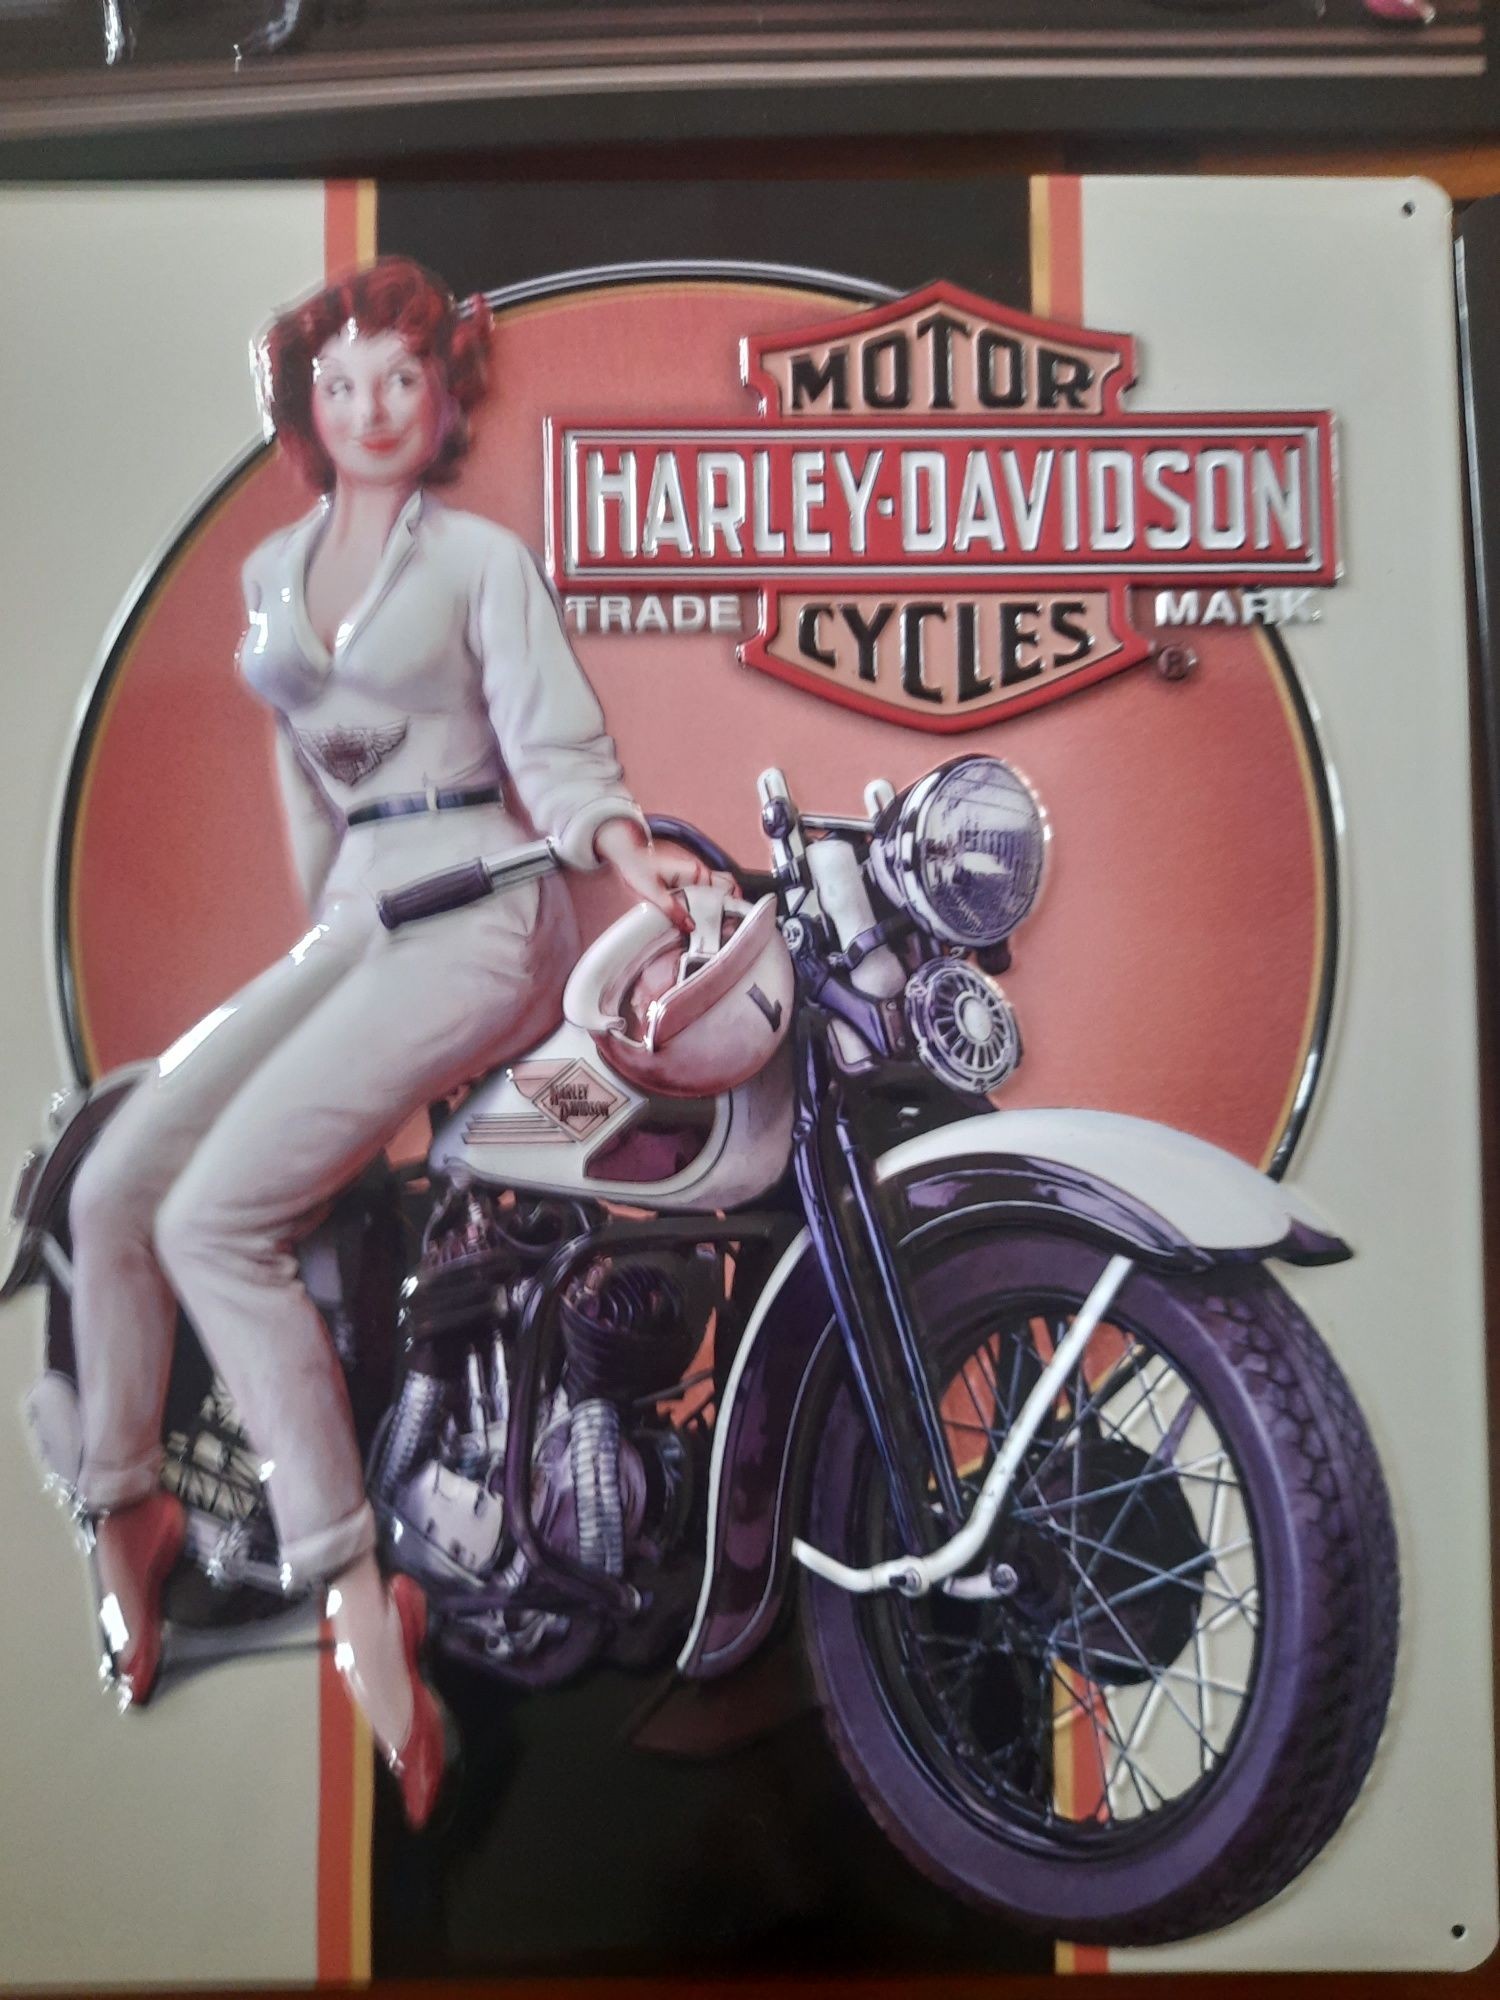 Reklama metalowa Harley Davidson.